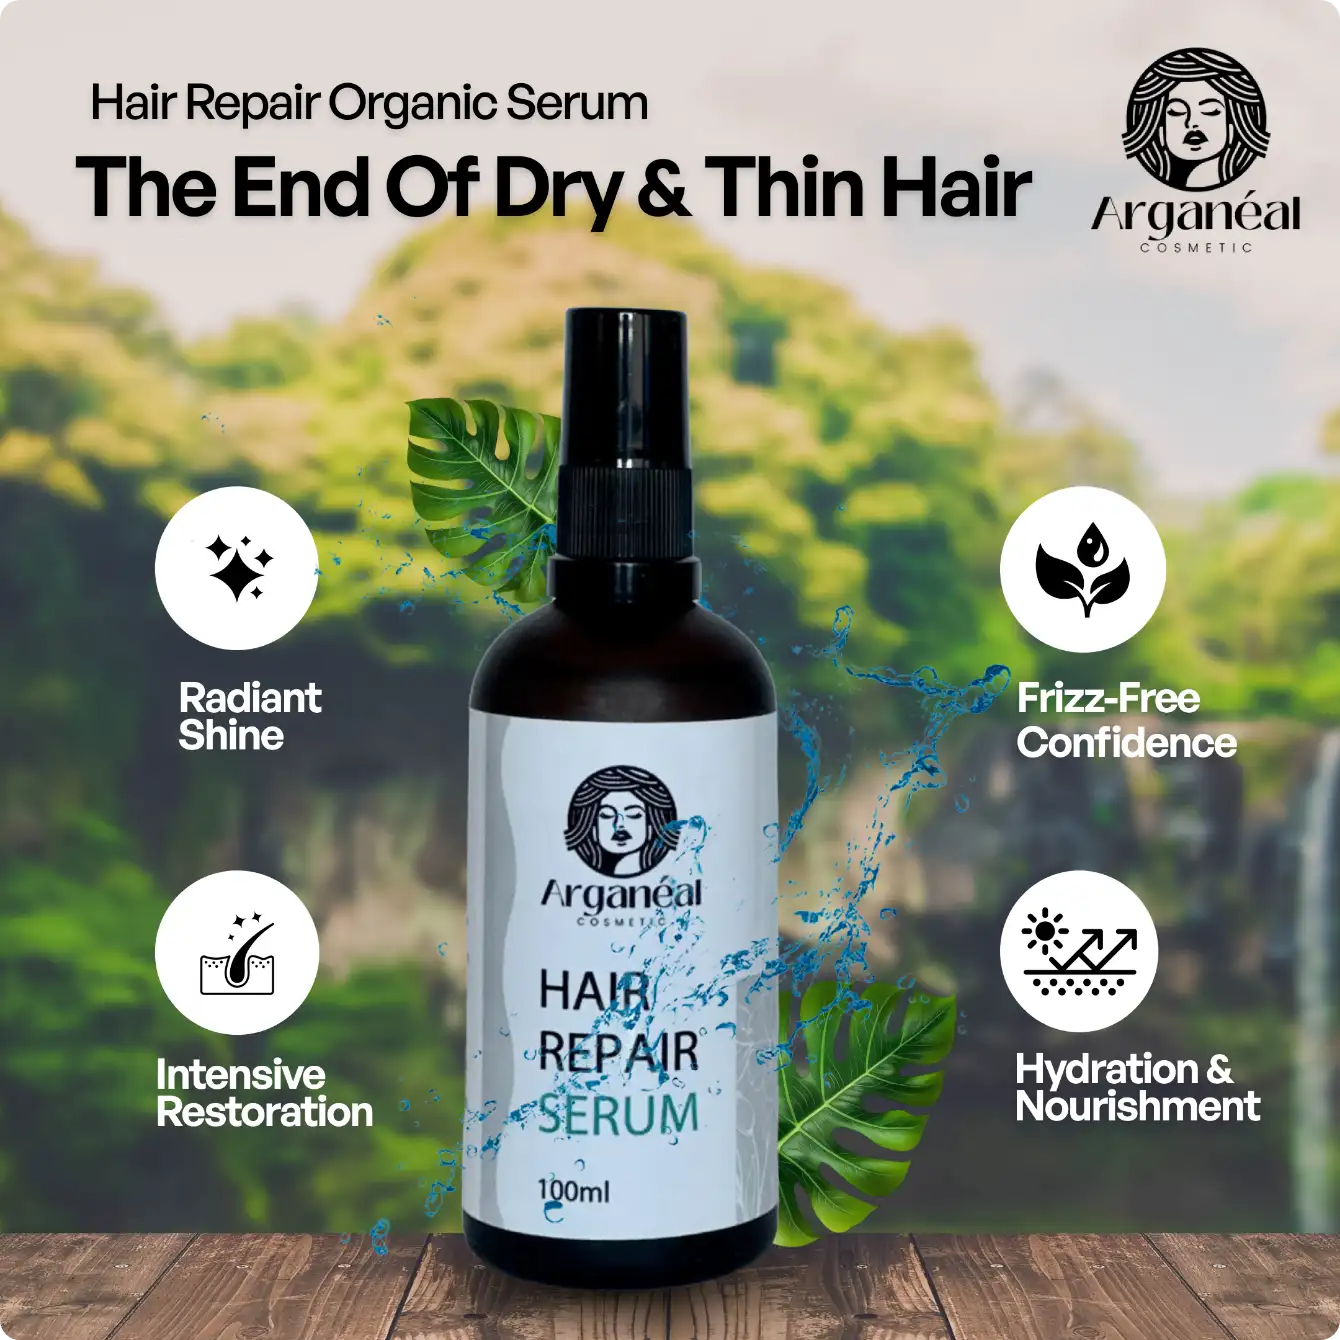 Arganeal™ Moroccan Hair Repair Organic Serum - The End Of Dry & Thin Hair